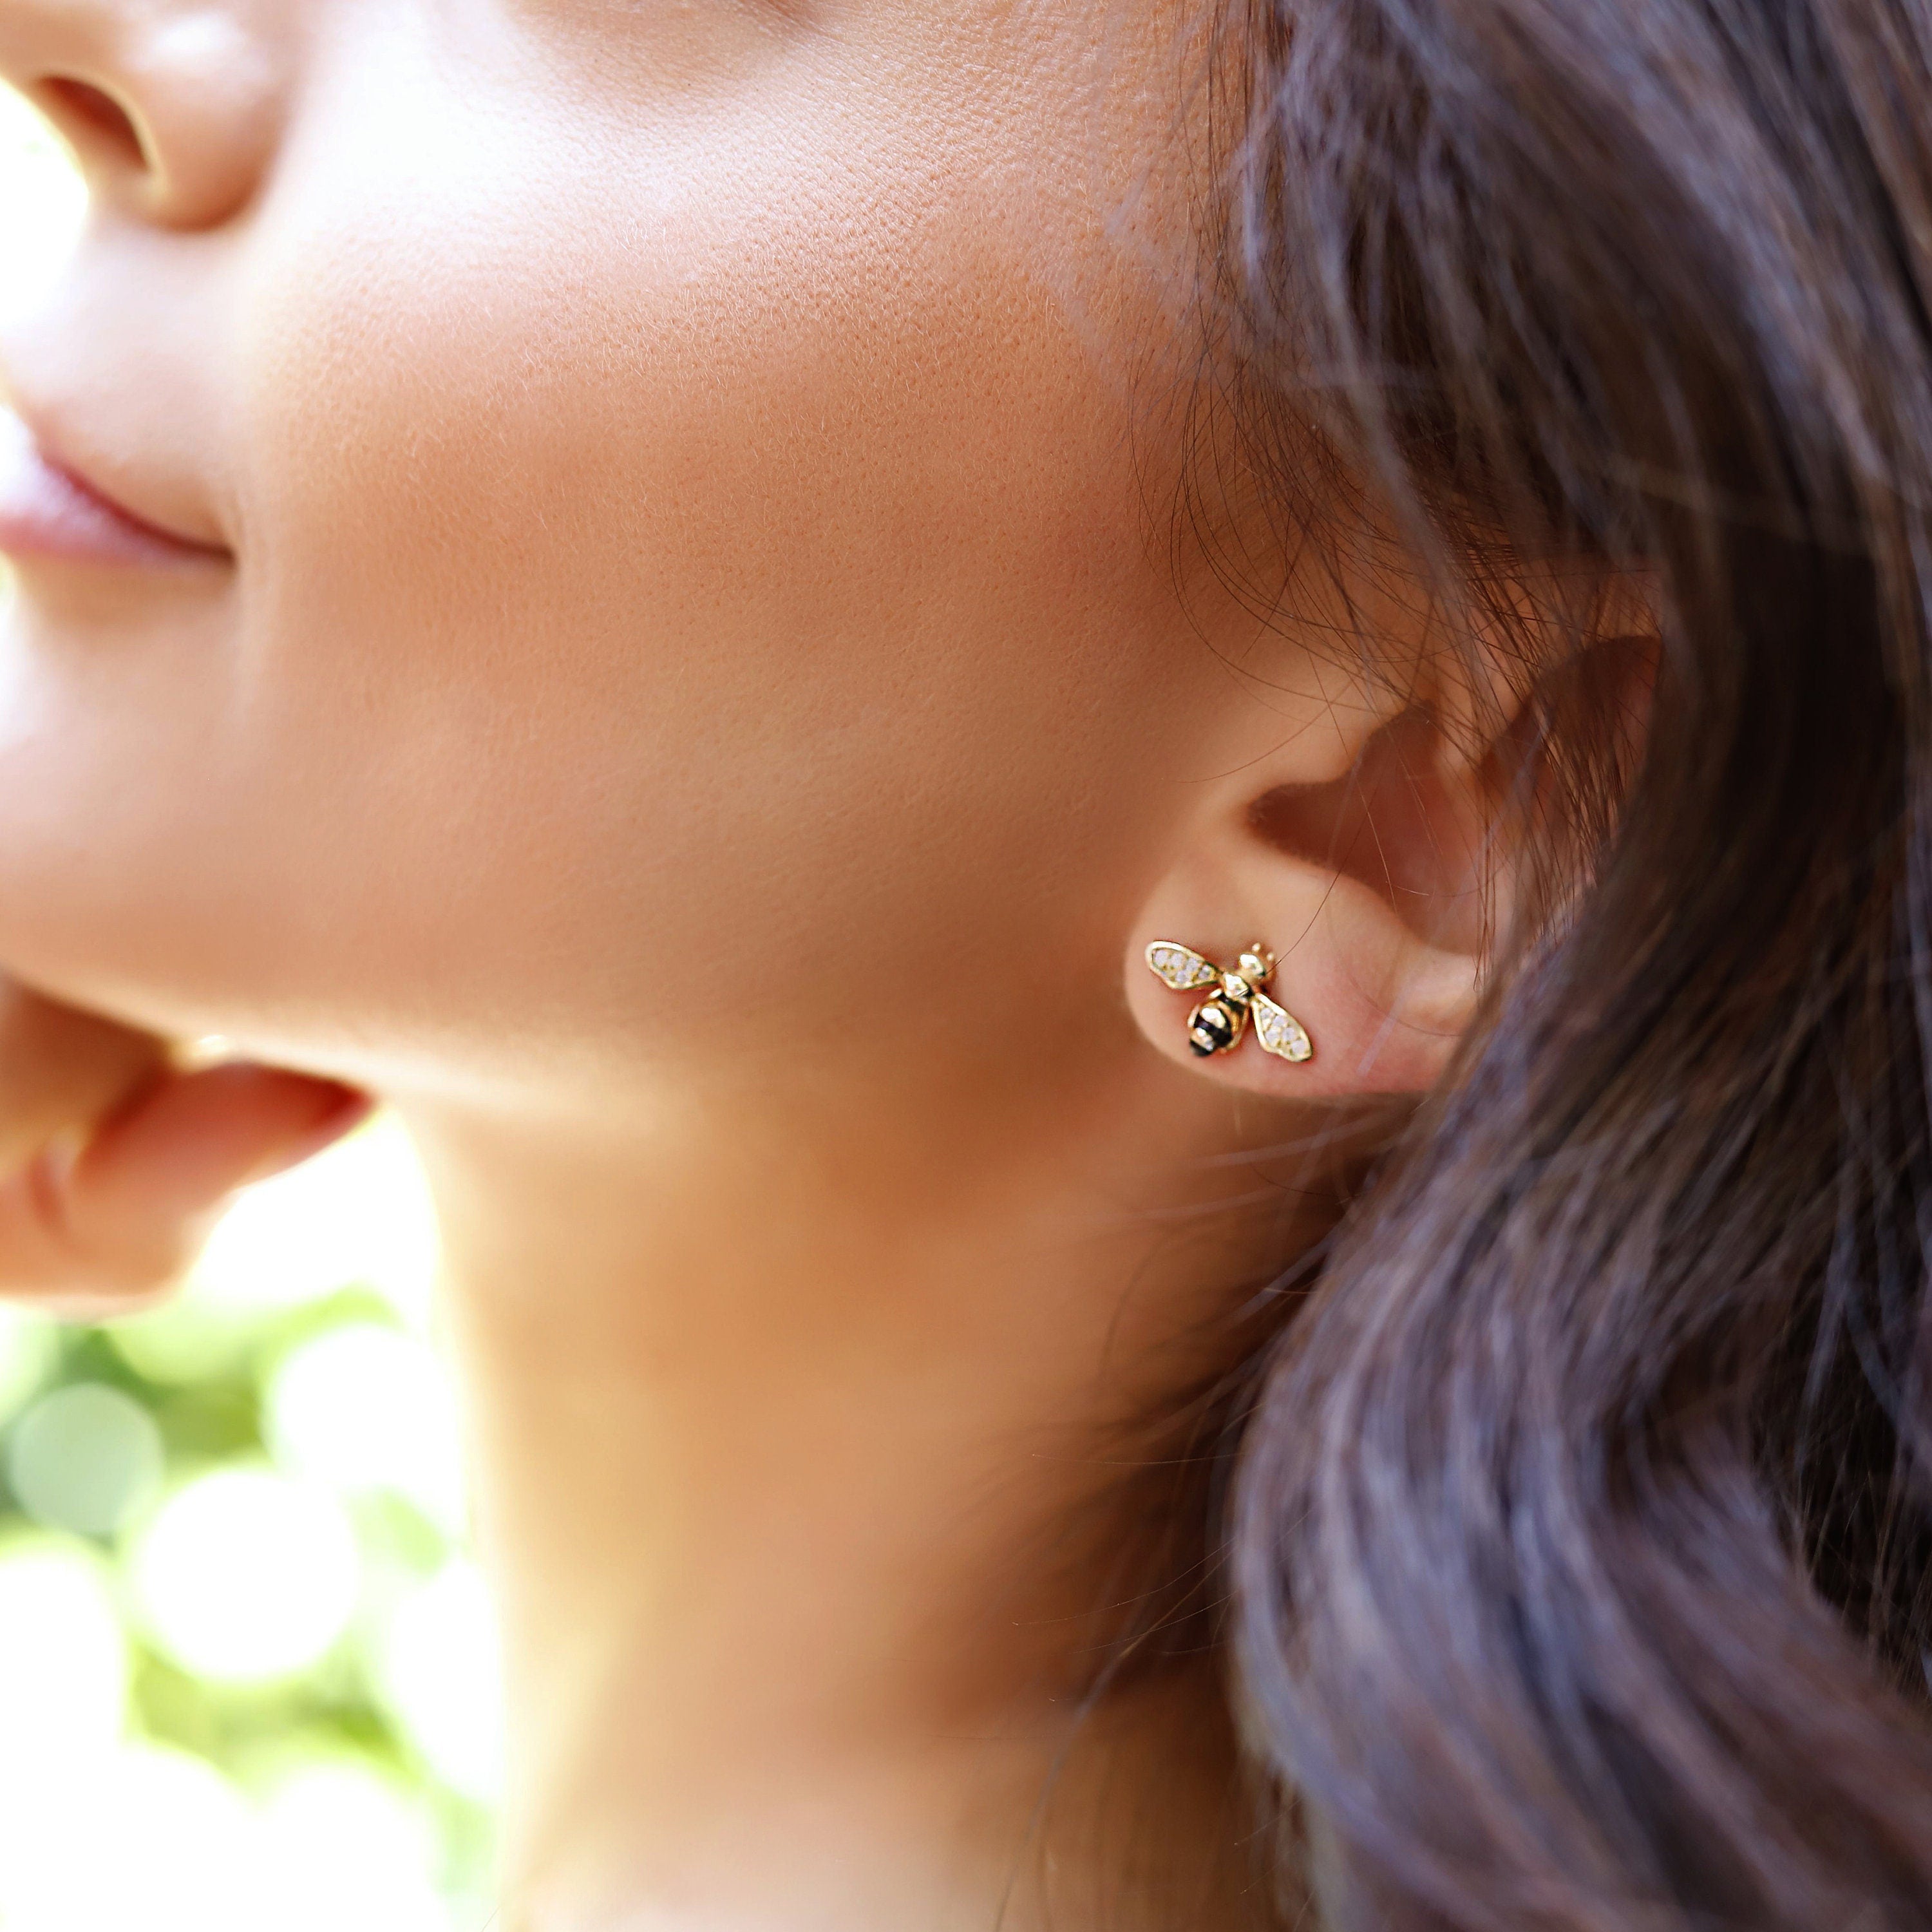 Silver stud earrings - earrings with silver flying bee, summer bee earrings, flying animal inspired earrings